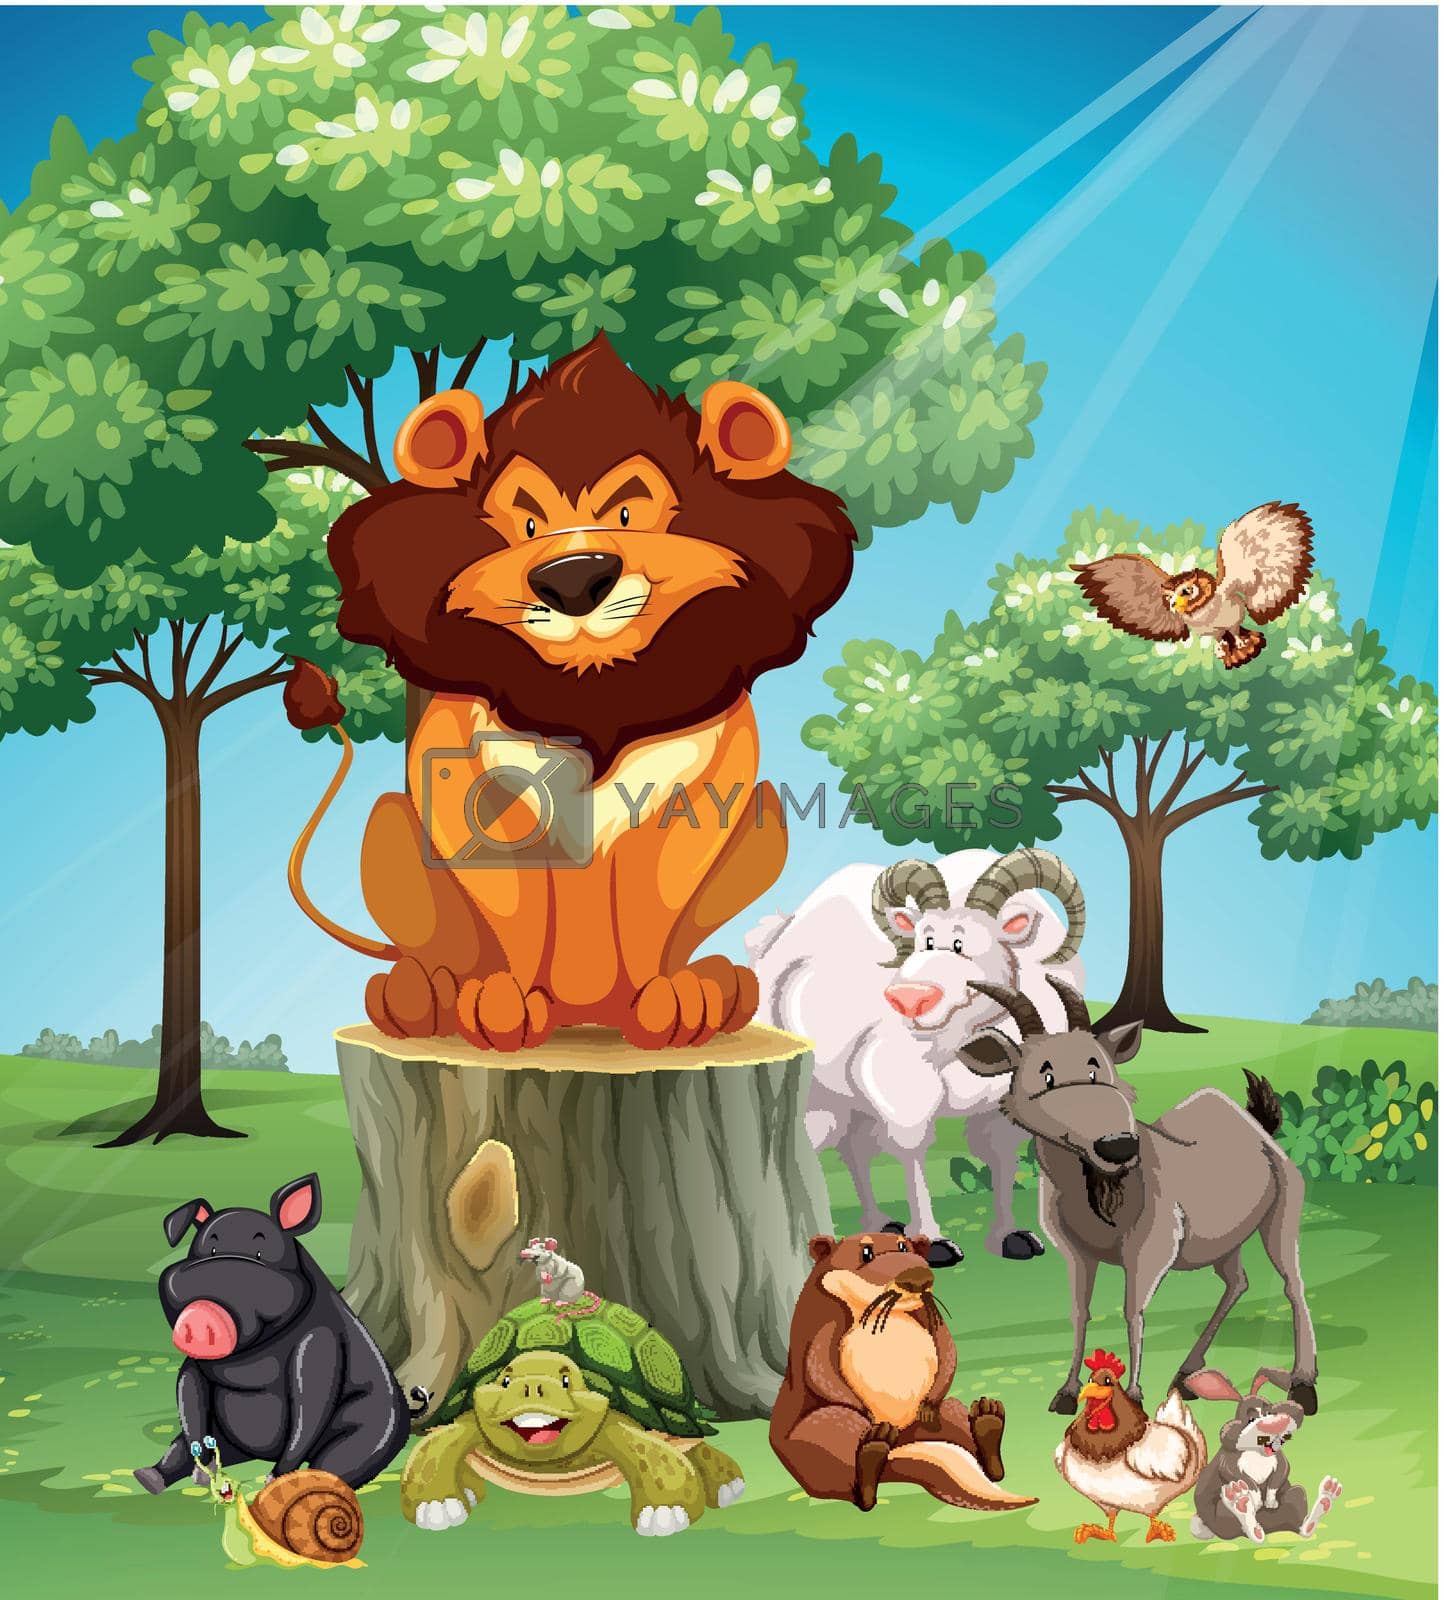 Many animals in the safari illustration